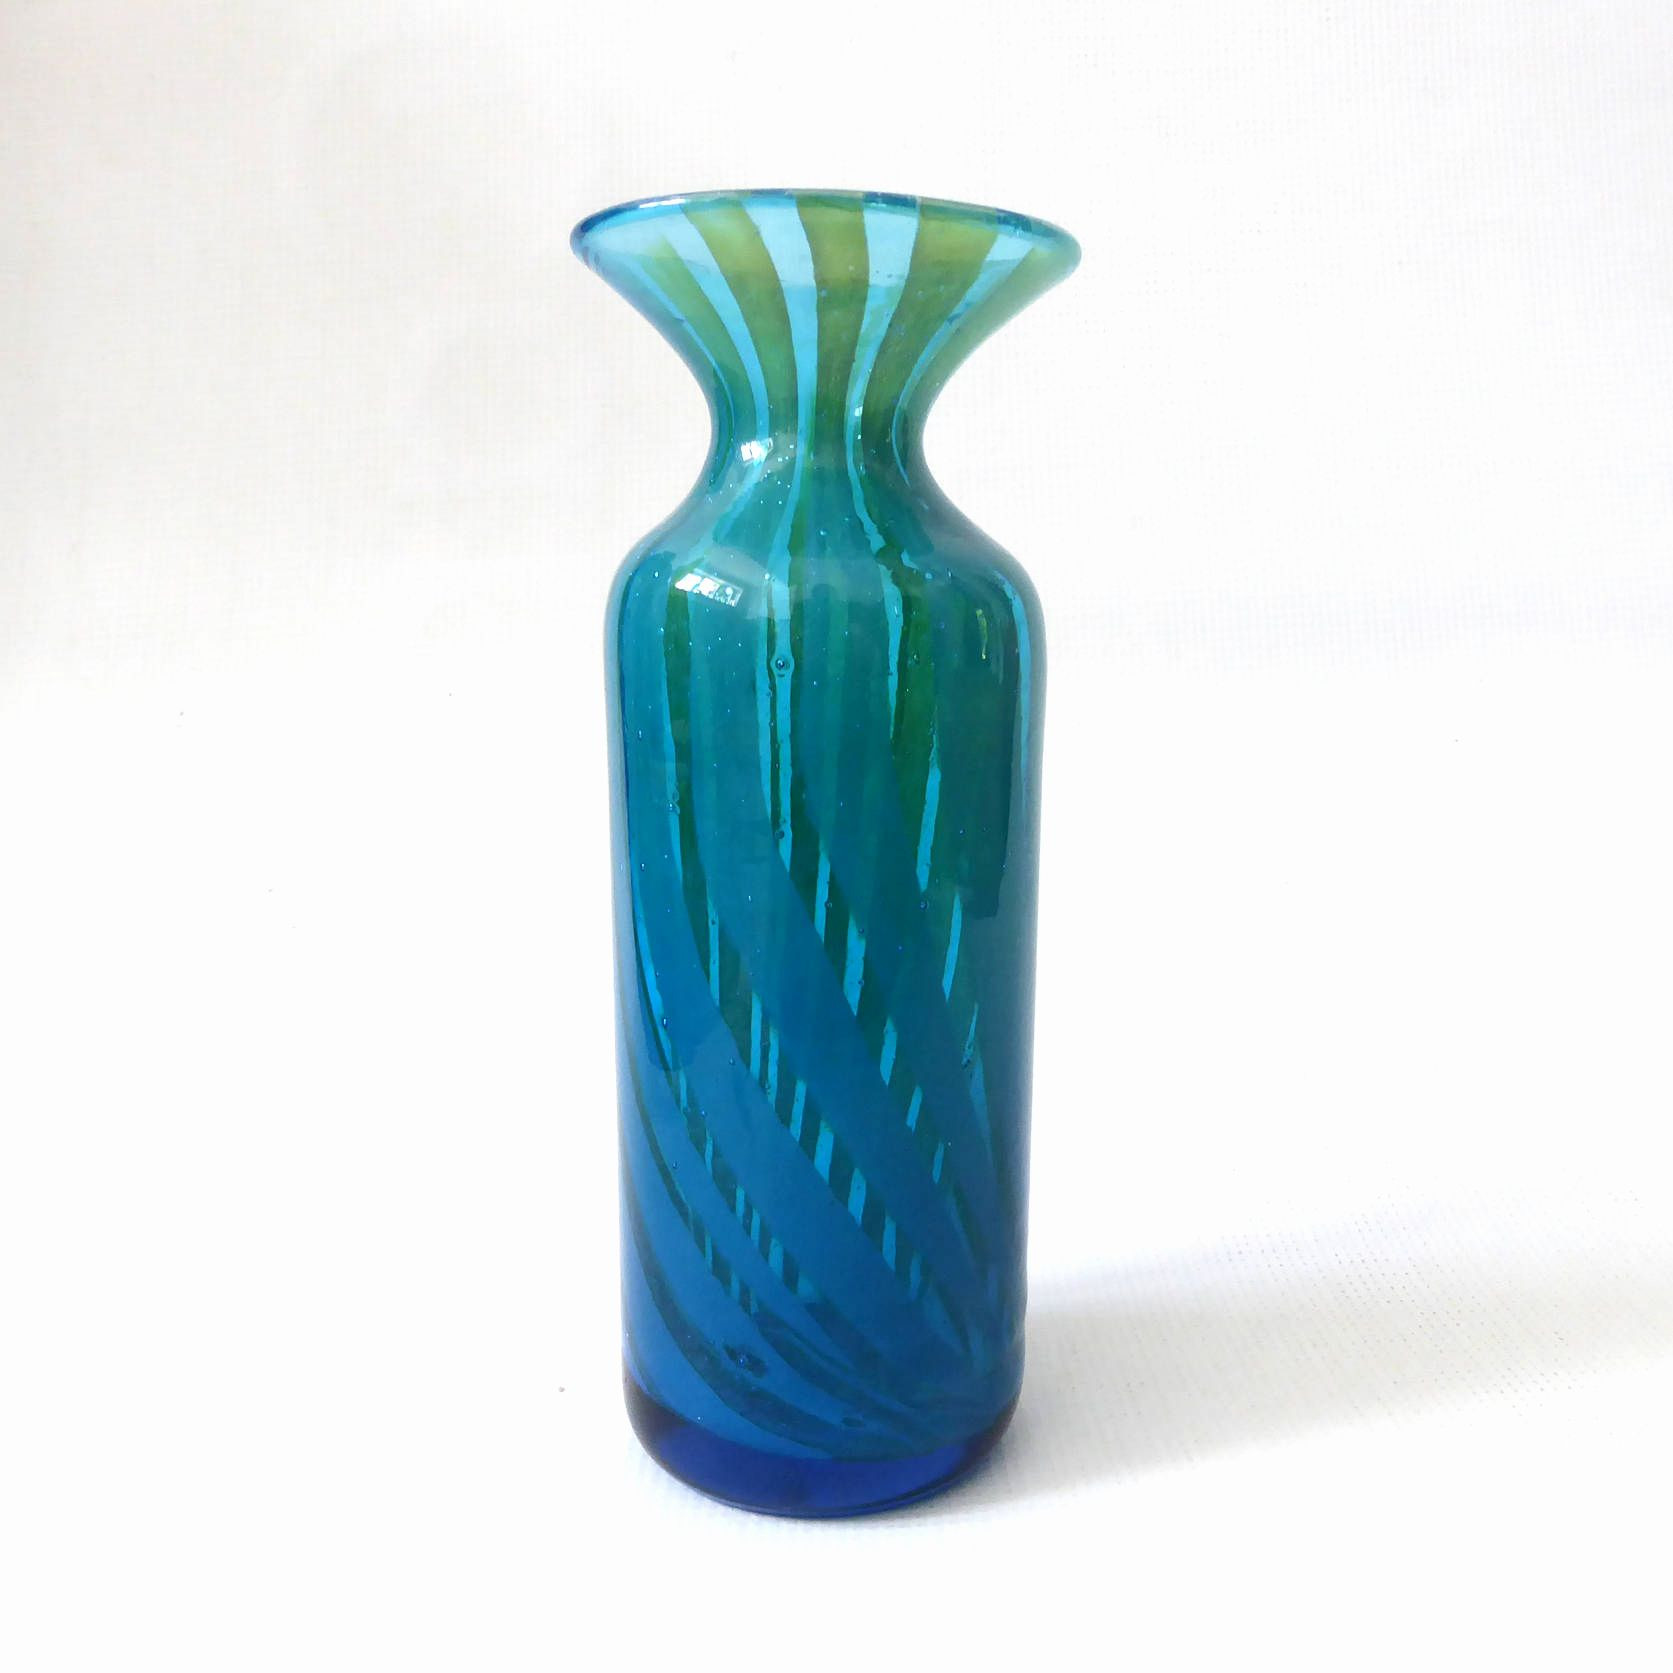 23 Elegant Decorative Blue Glass Vases 2022 free download decorative blue glass vases of 35 antique green glass vases the weekly world intended for antique glass vases identify vase and cellar image avorcor